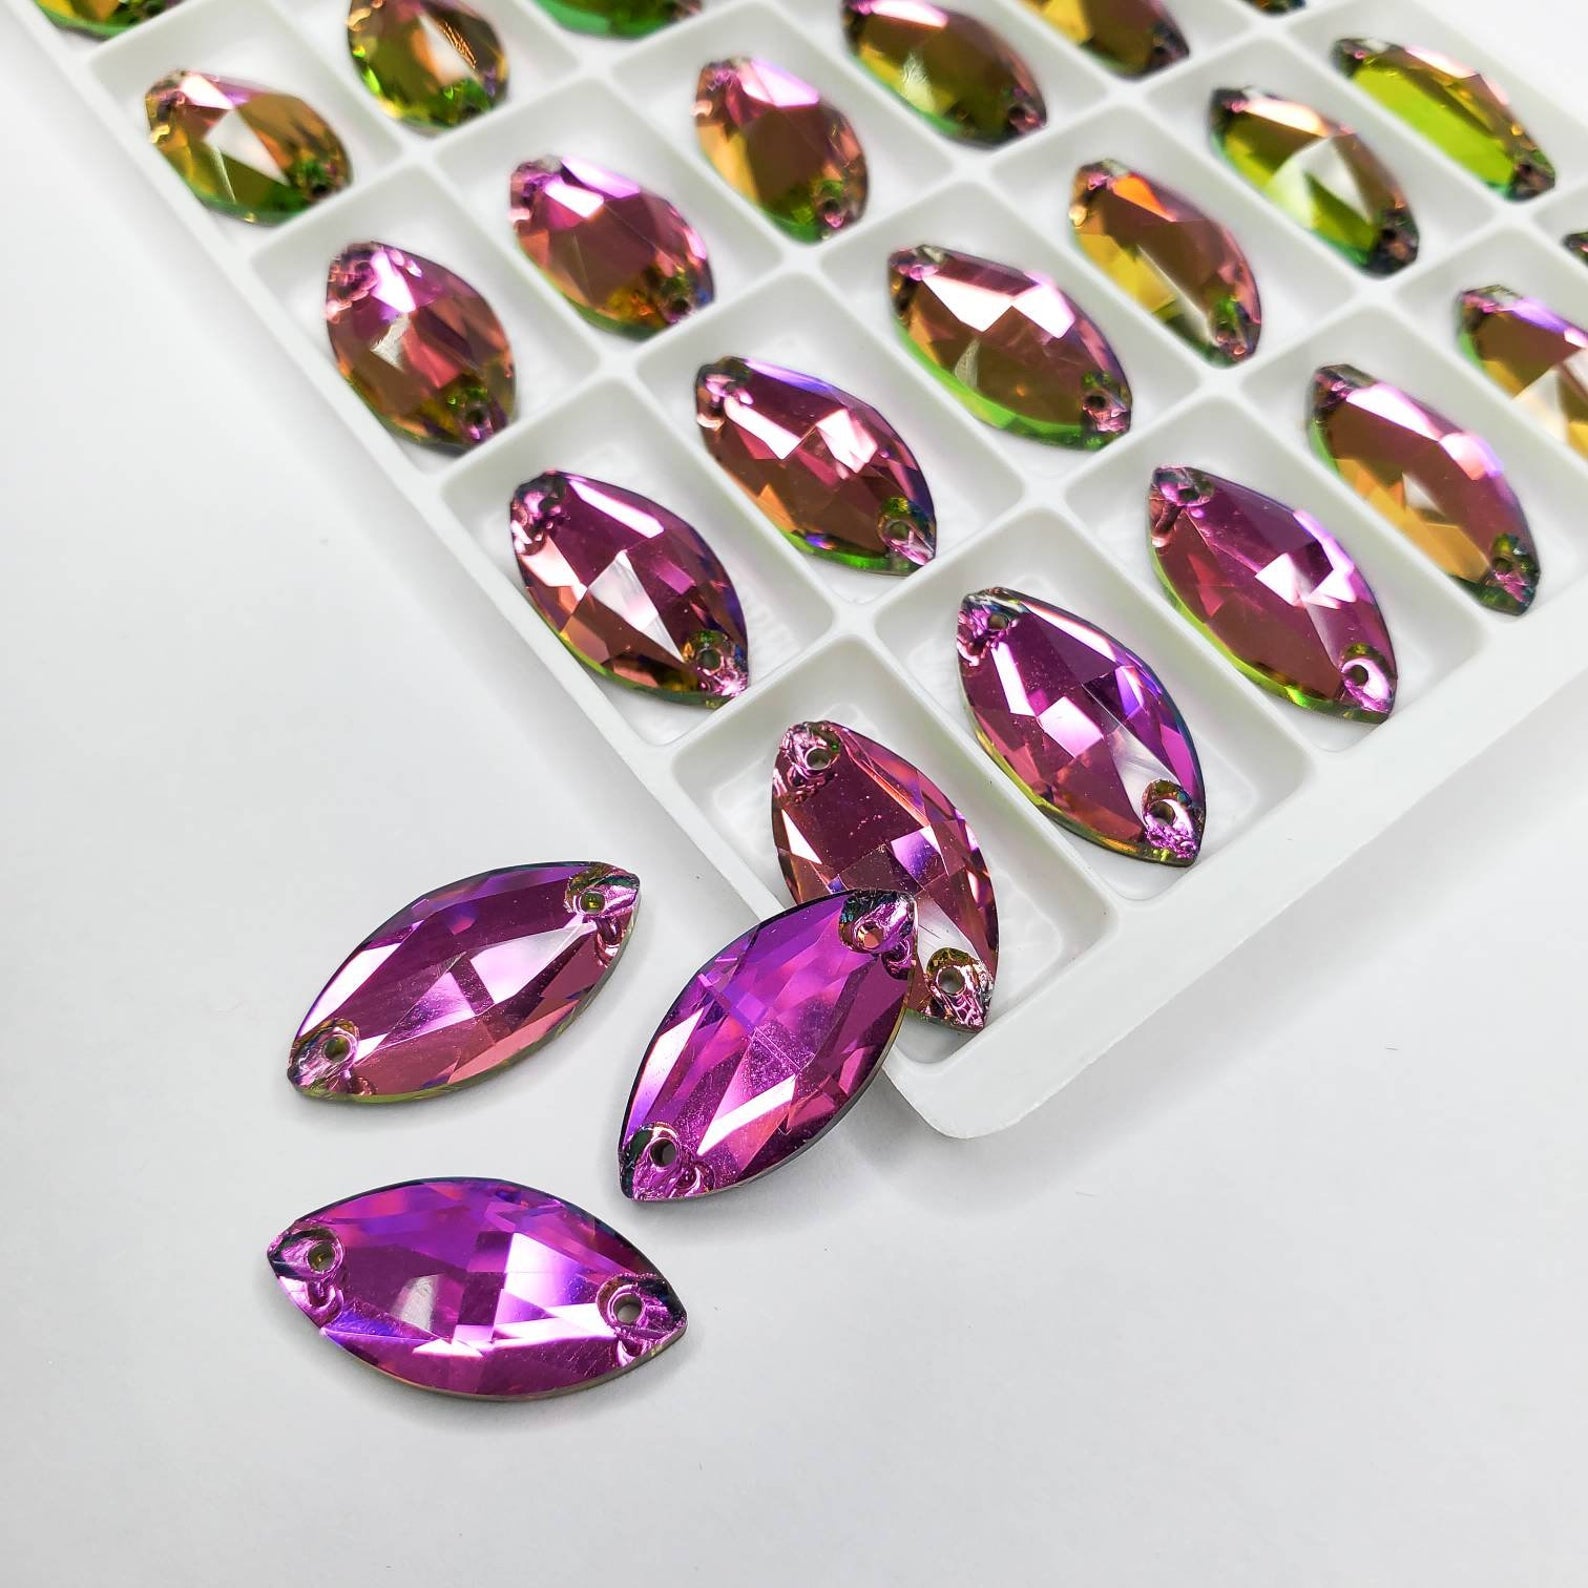 8mm-12mm Violet Color Glass Crystal Sew on Rhinestone Set Flatback